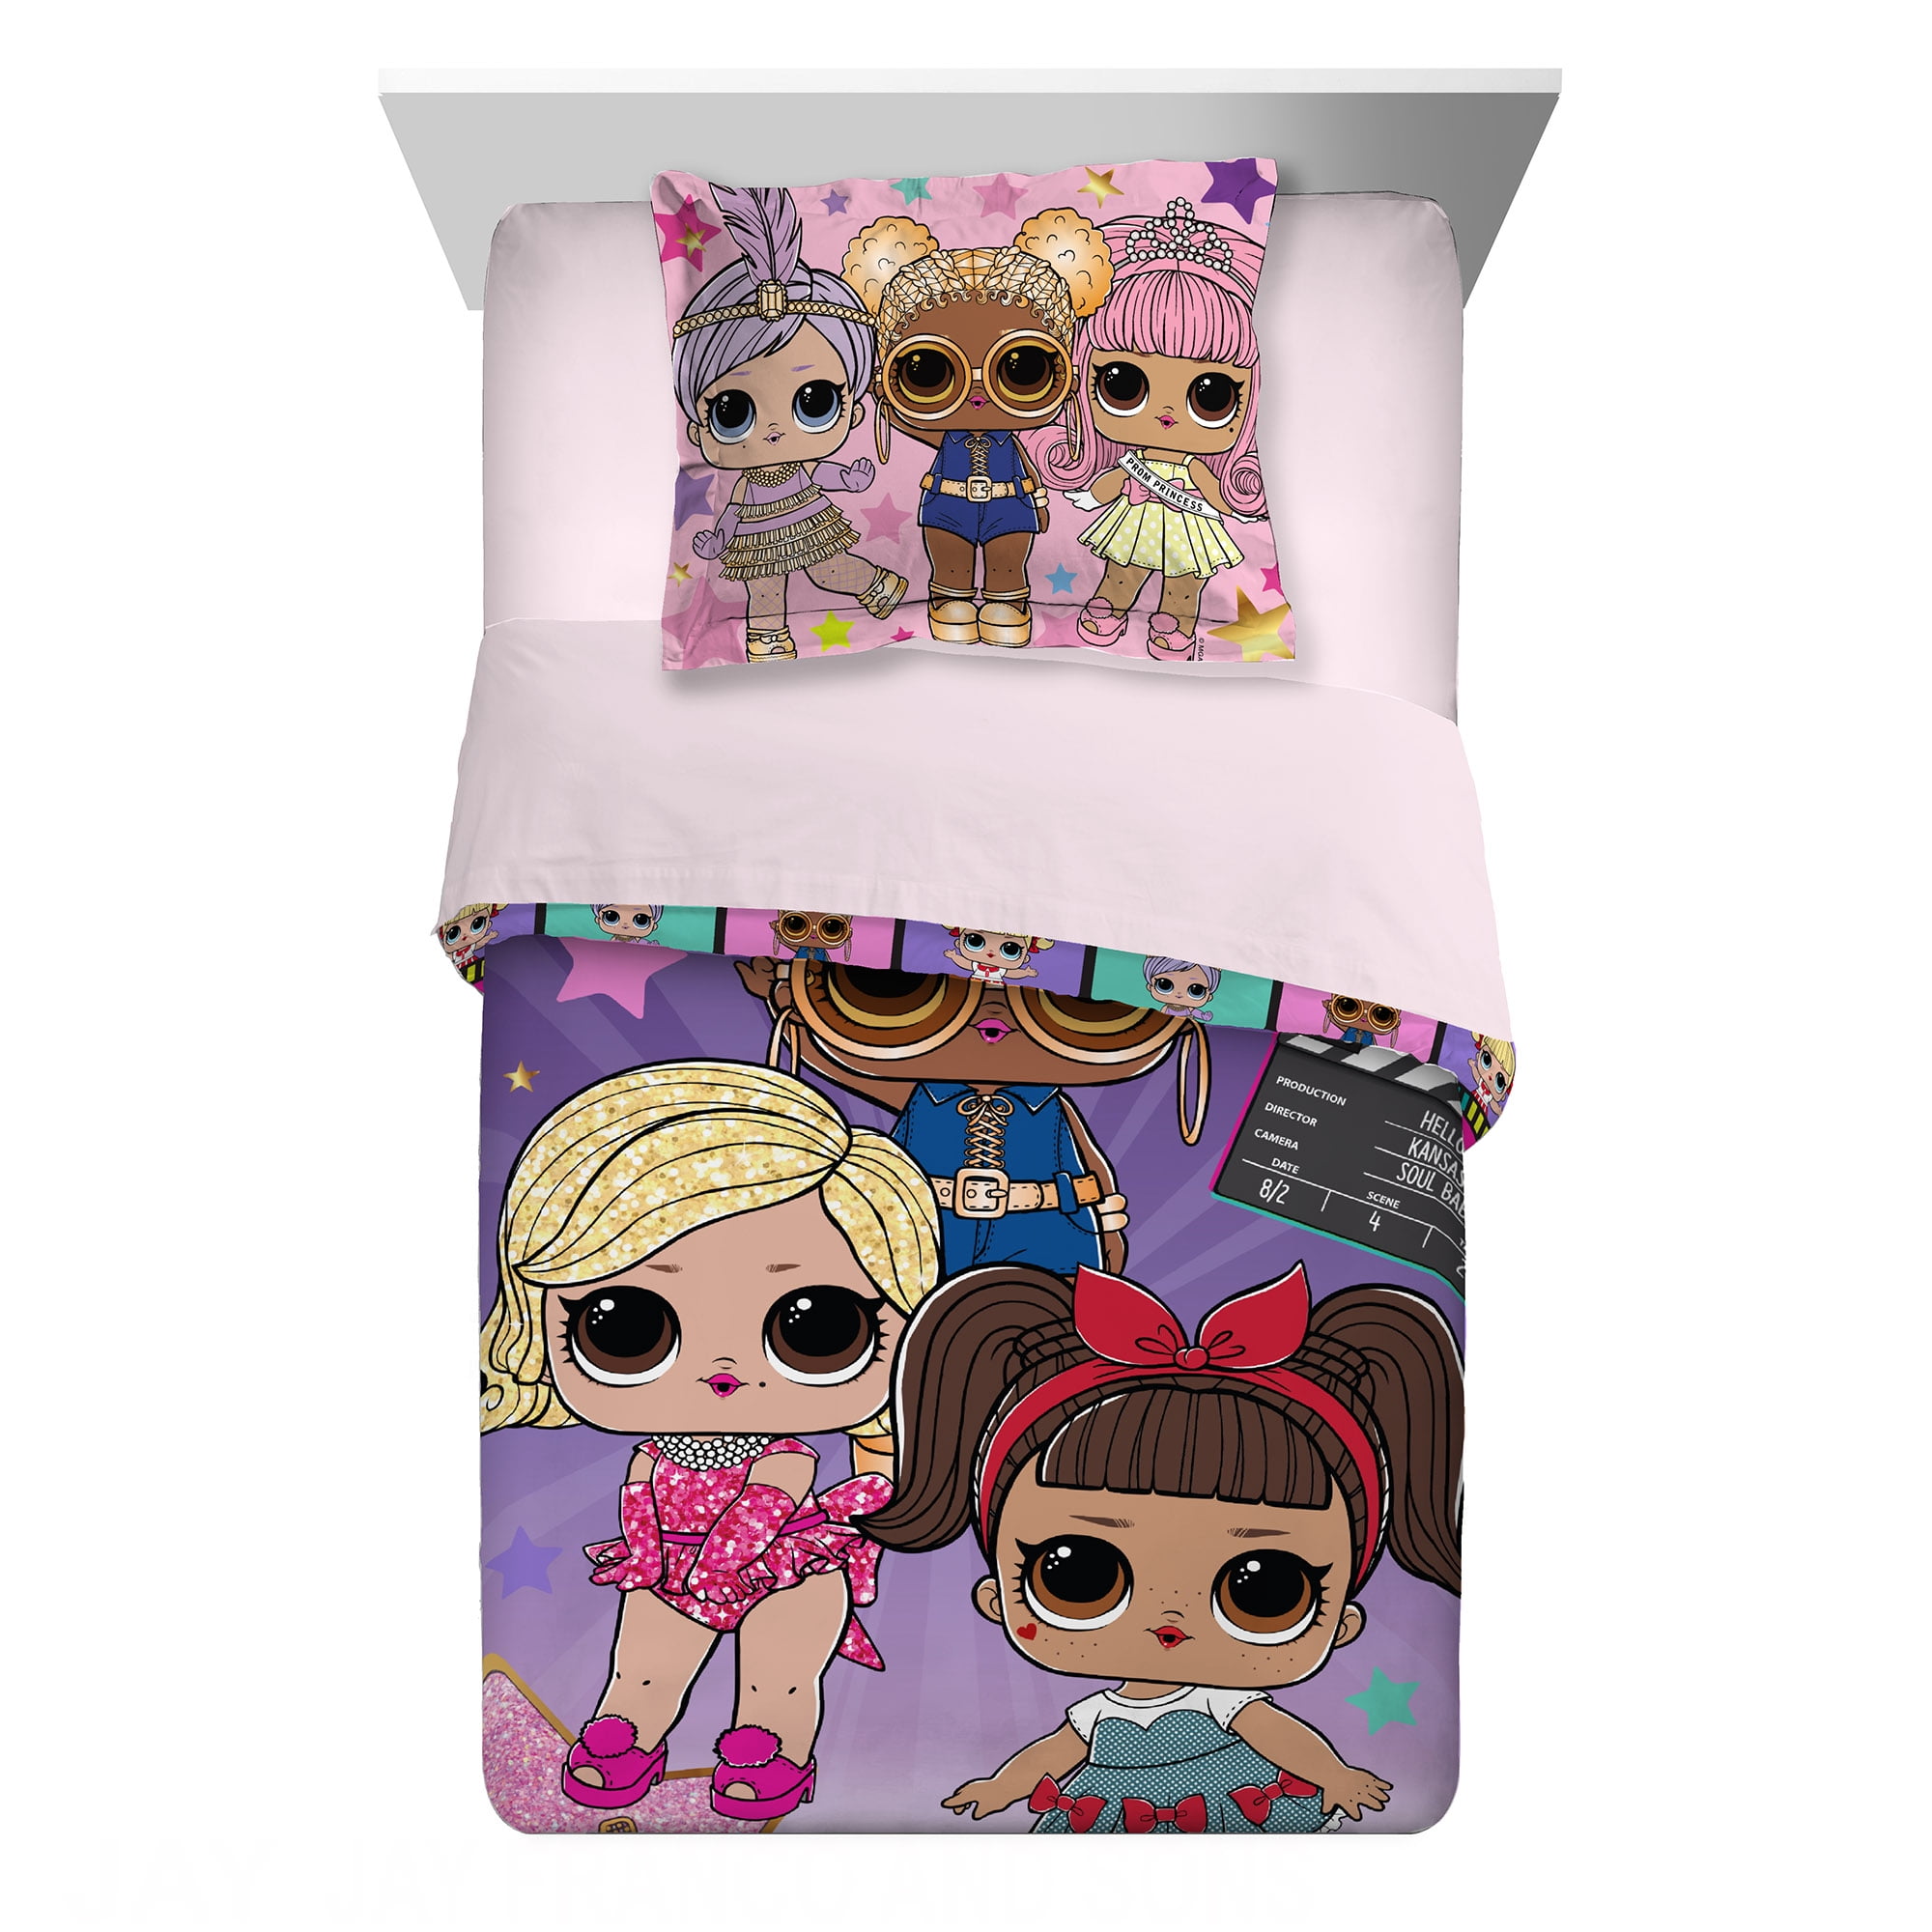 Girls Surprise Bedding Set LOL Kids Comforter Sheets Pillow Case Pink Twin Size 